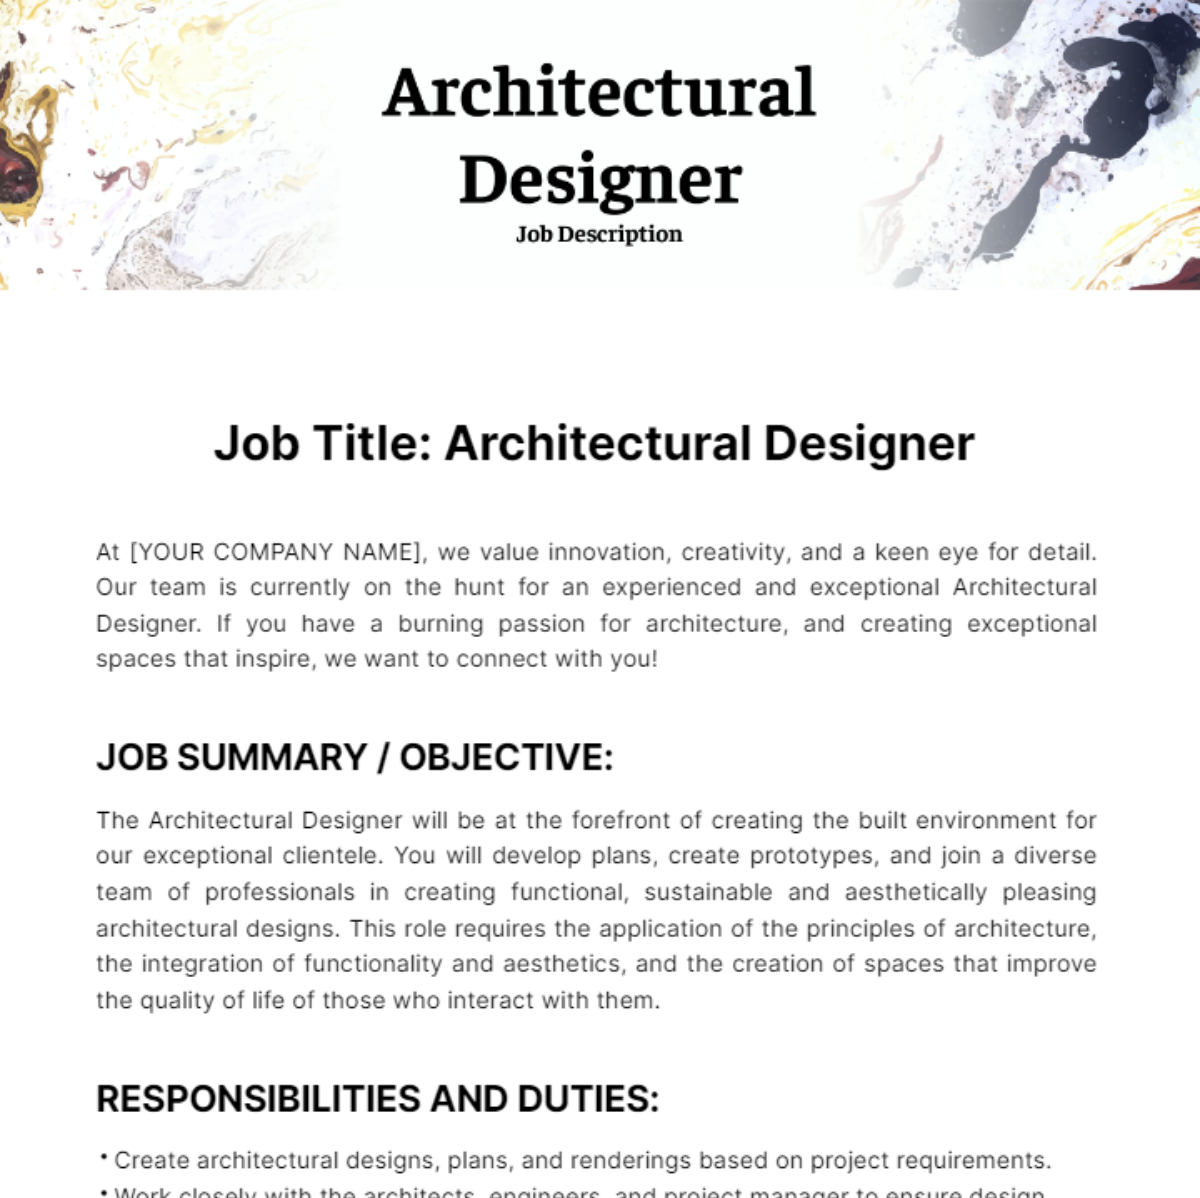 Architectural Designer Job Description Template